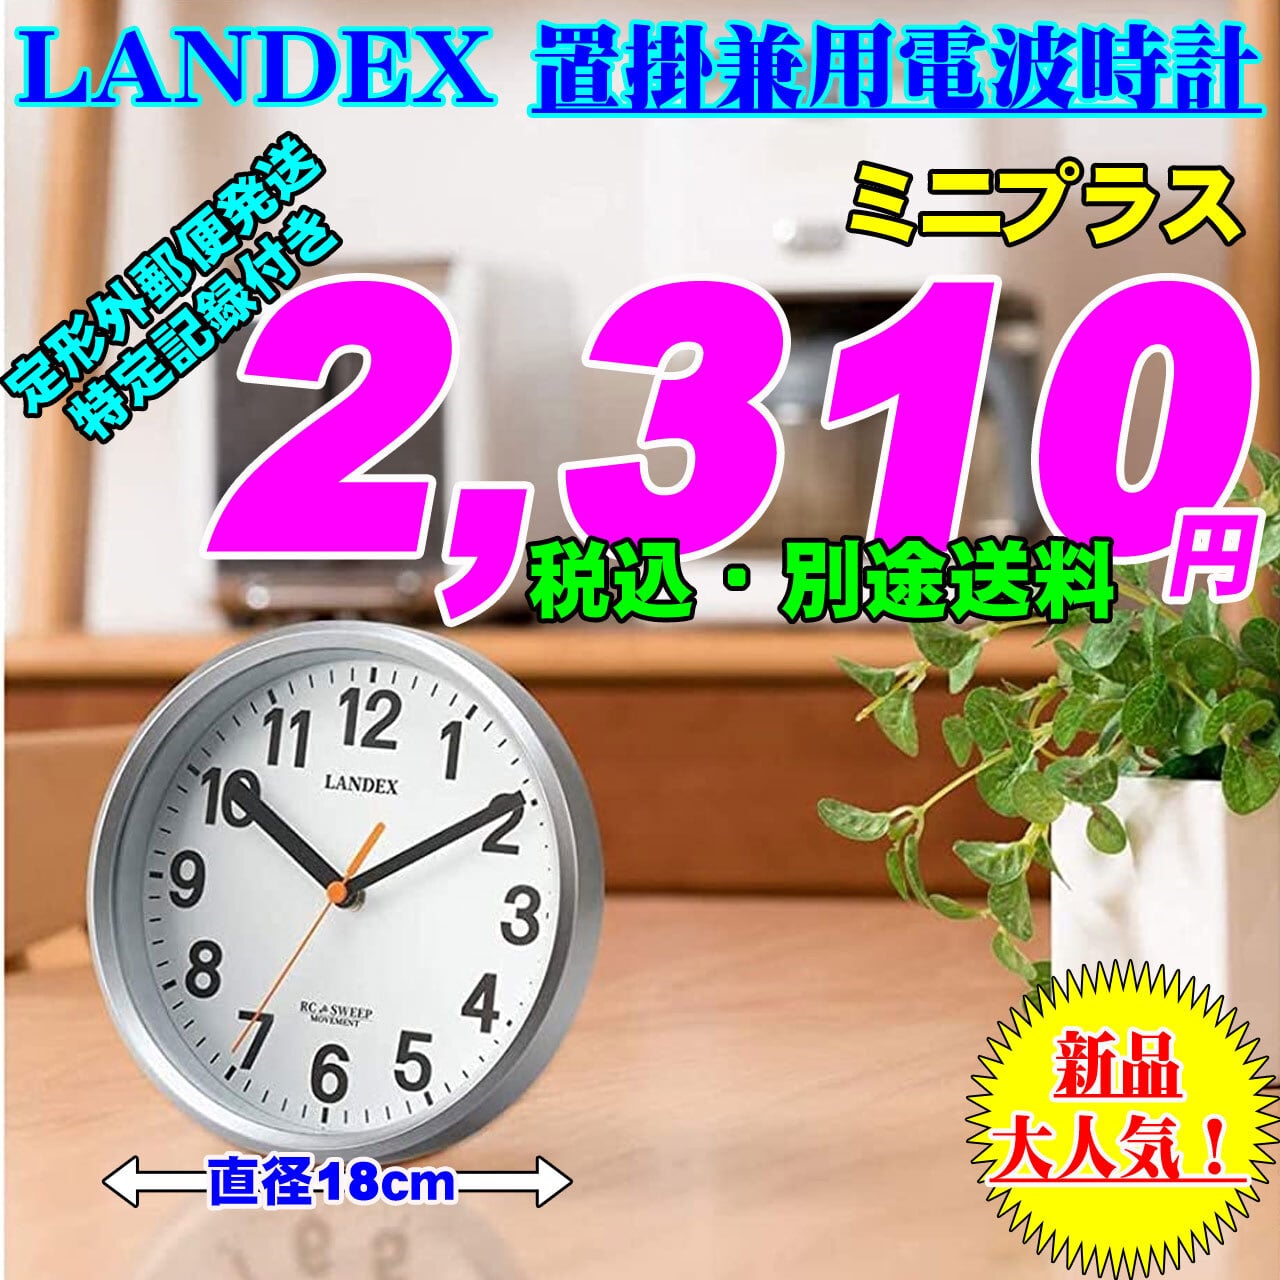 LANDEX 直径18cm 小ぶりな置掛兼用電波時計 ミニ/プラス 新品です。